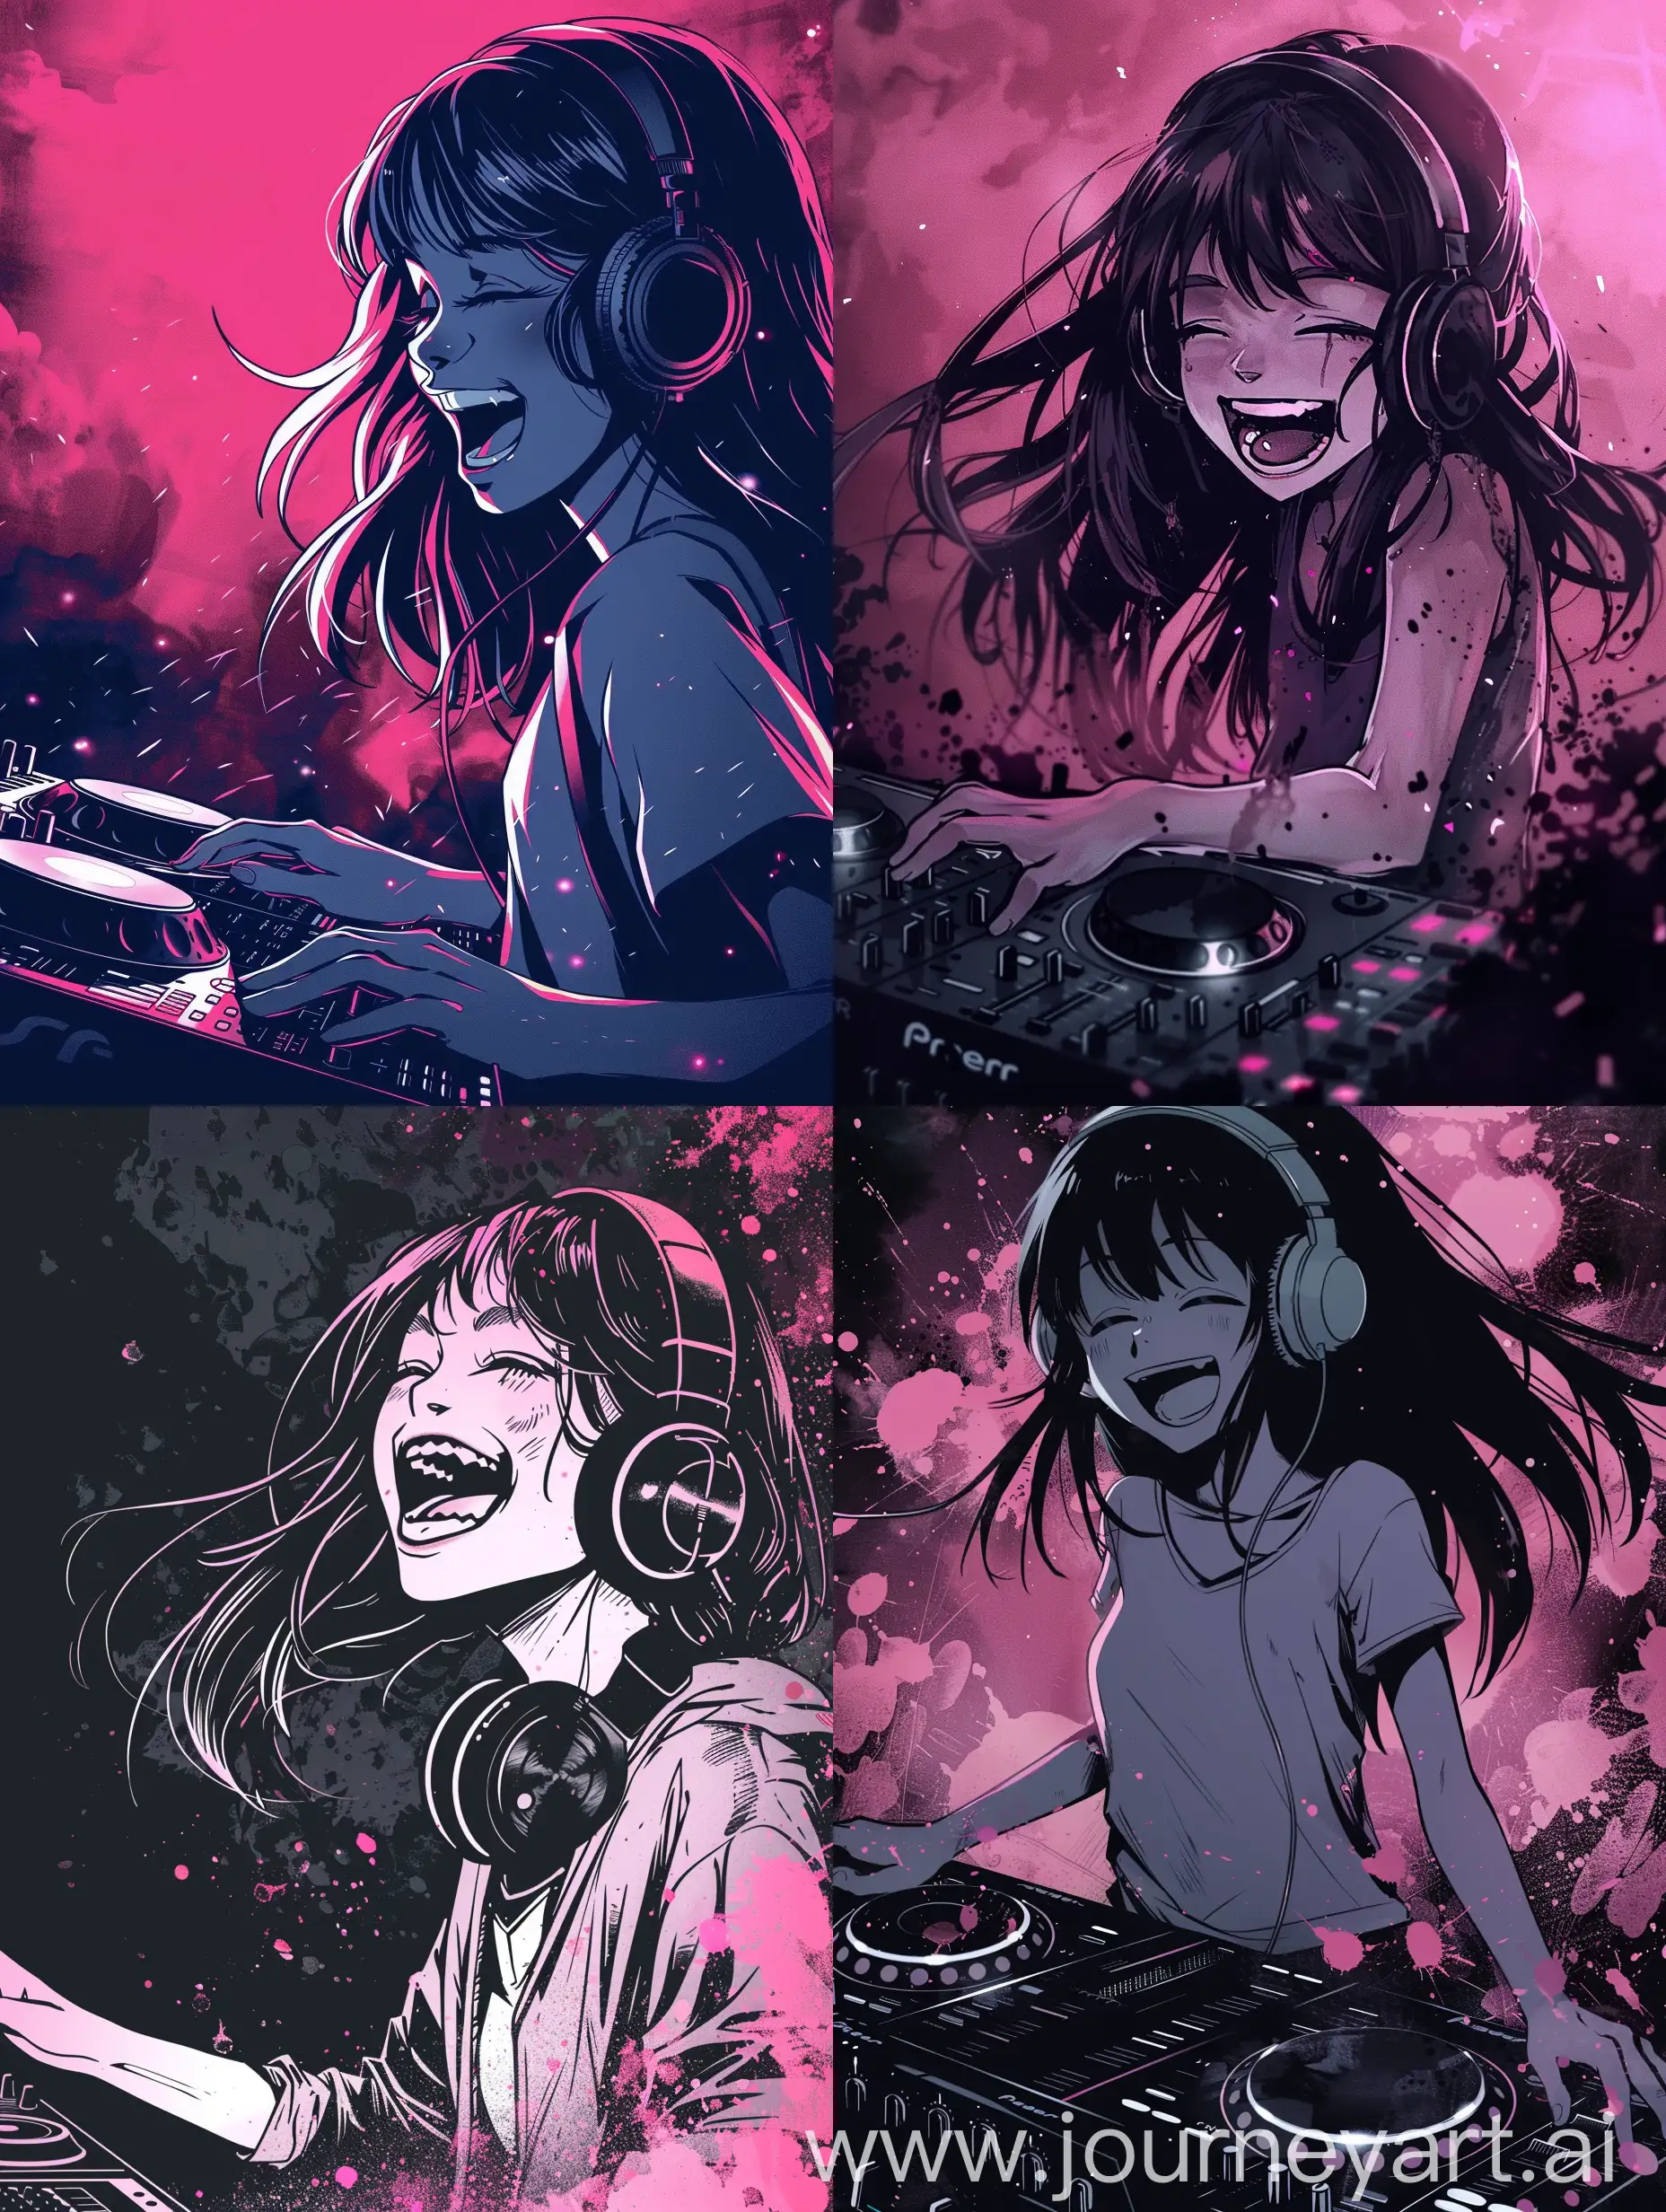 Joyful-Anime-Girl-DJ-Laughing-with-Headphones-on-Dark-Pink-Background